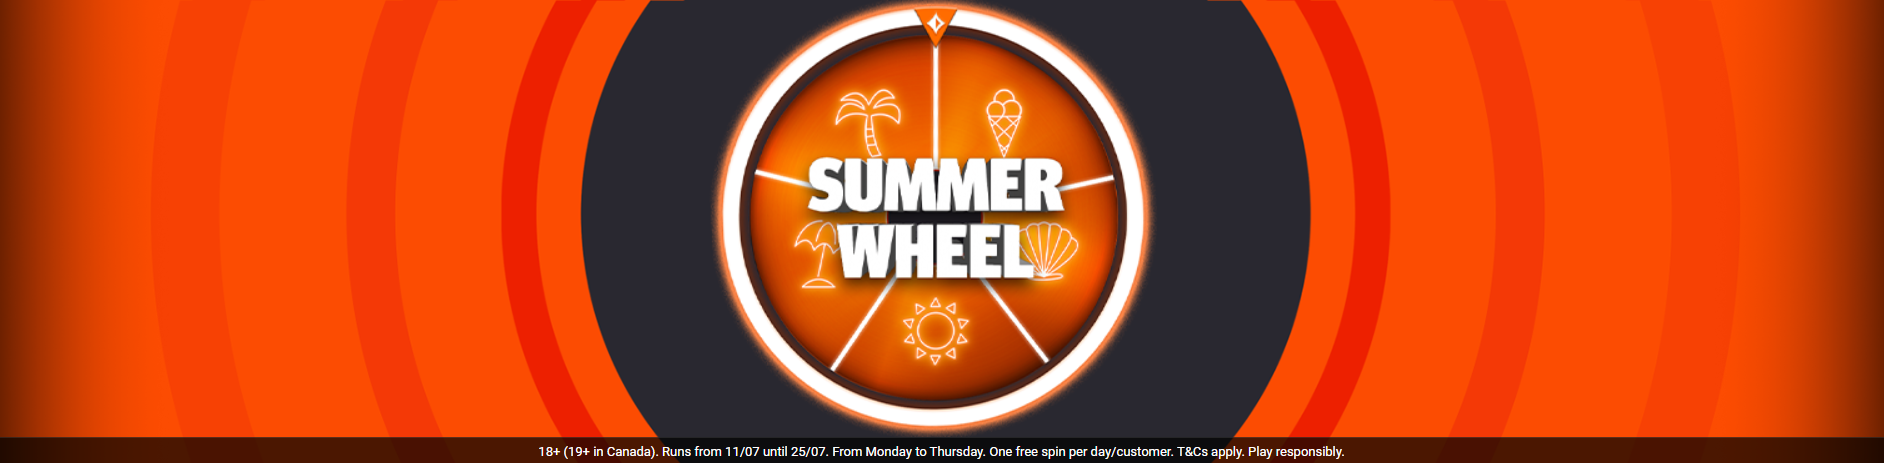 Summer Wheel Poker Promotion